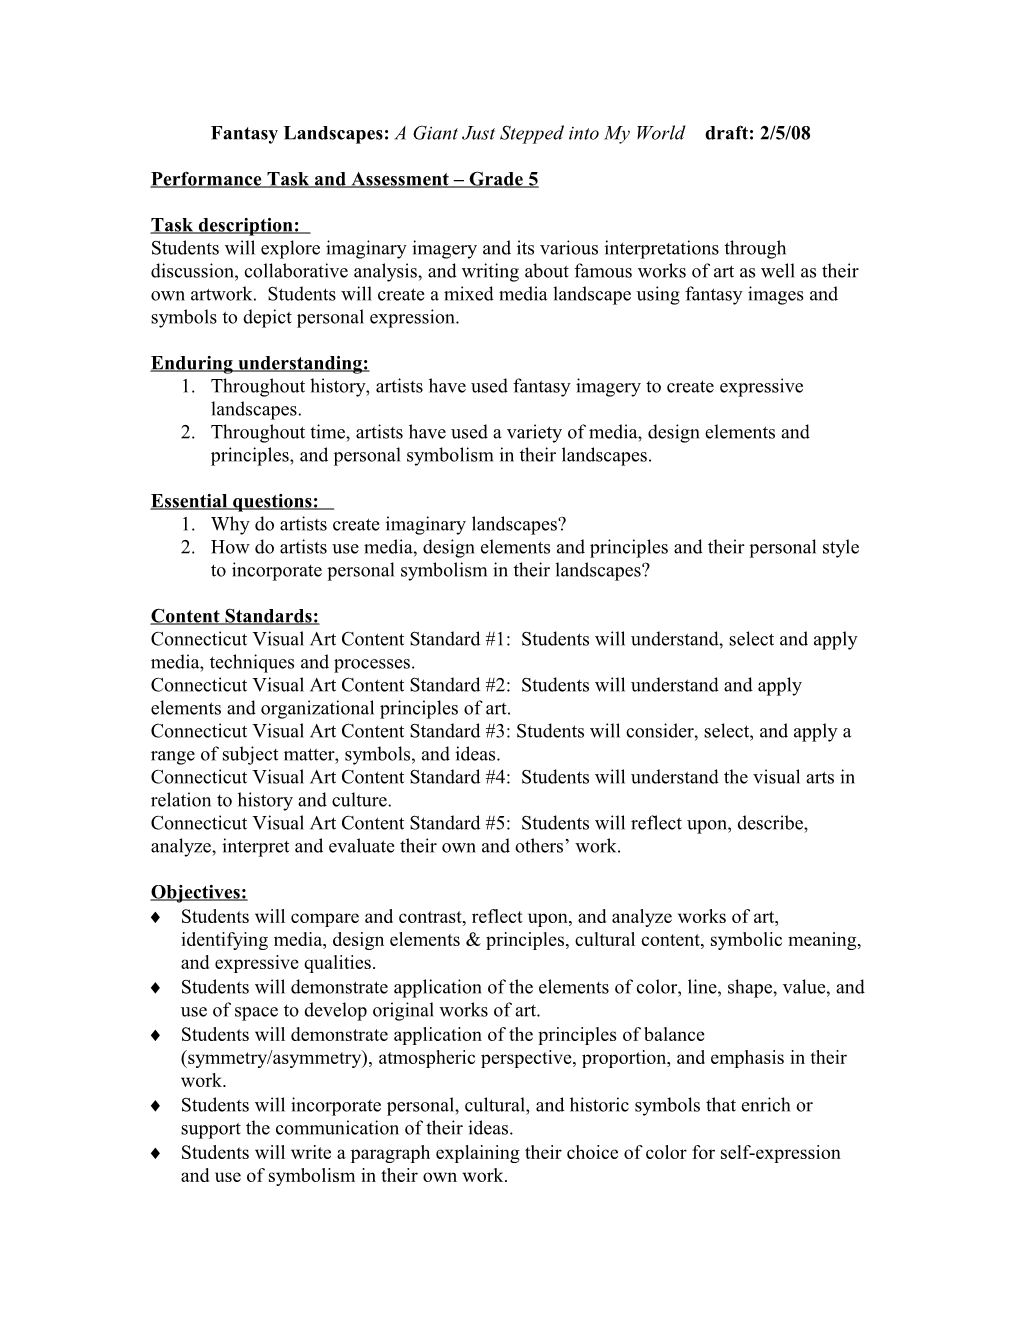 Performance Task and Assessment Grade 8